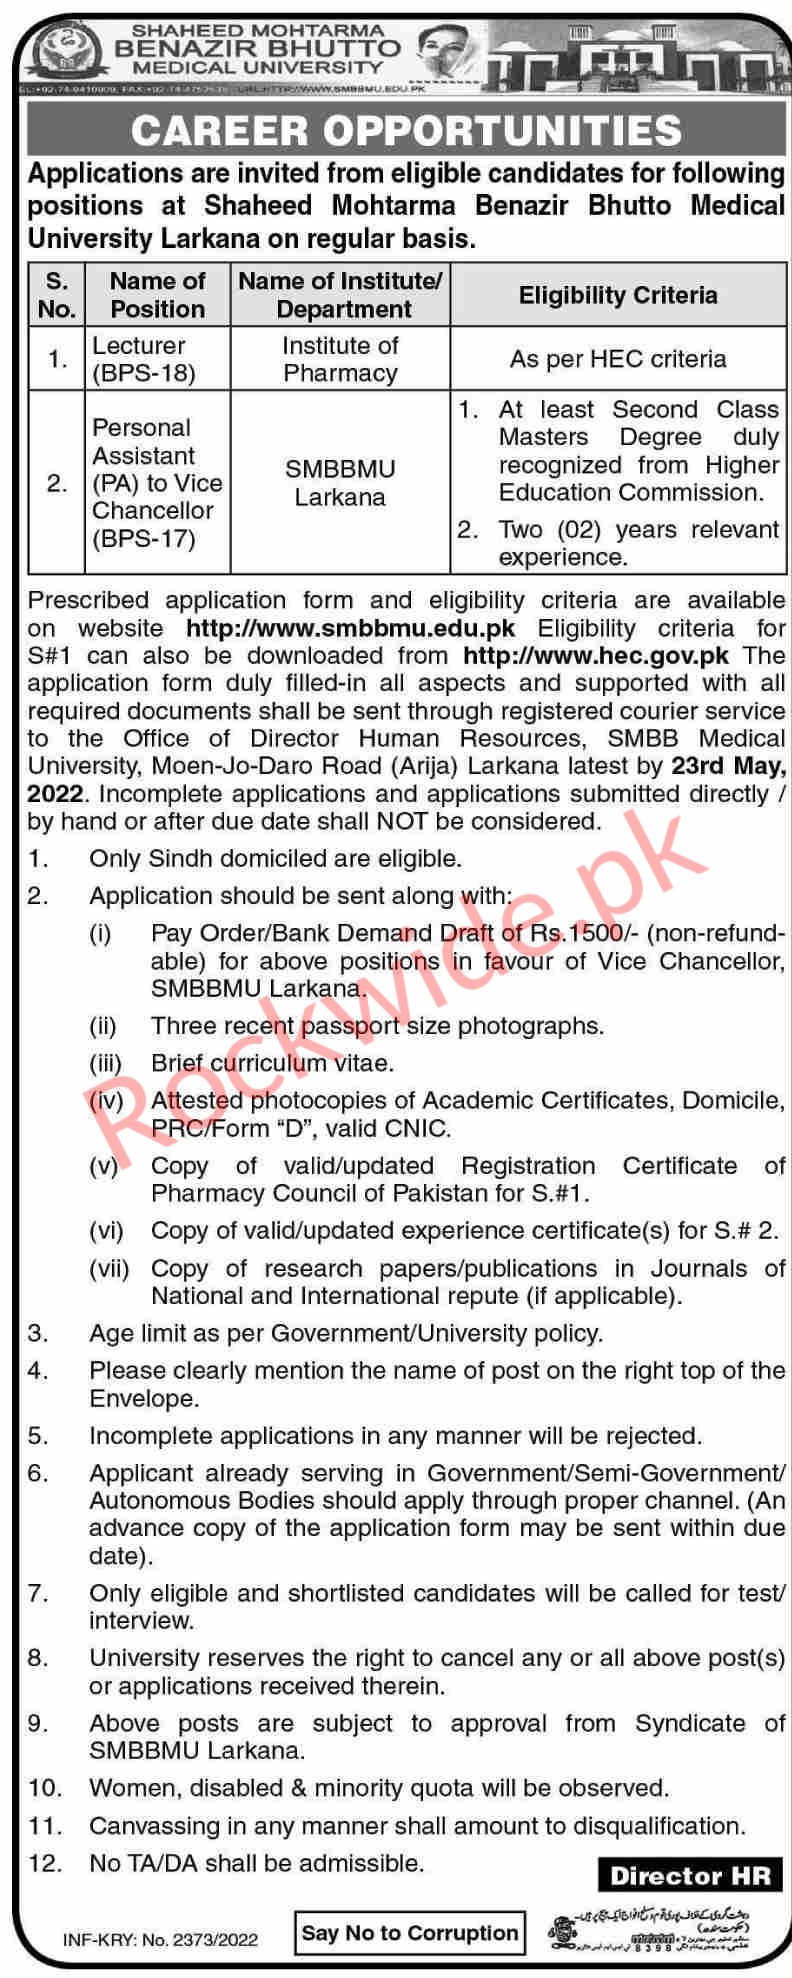 Shaheed Benazir Bhutto Medical University Jobs